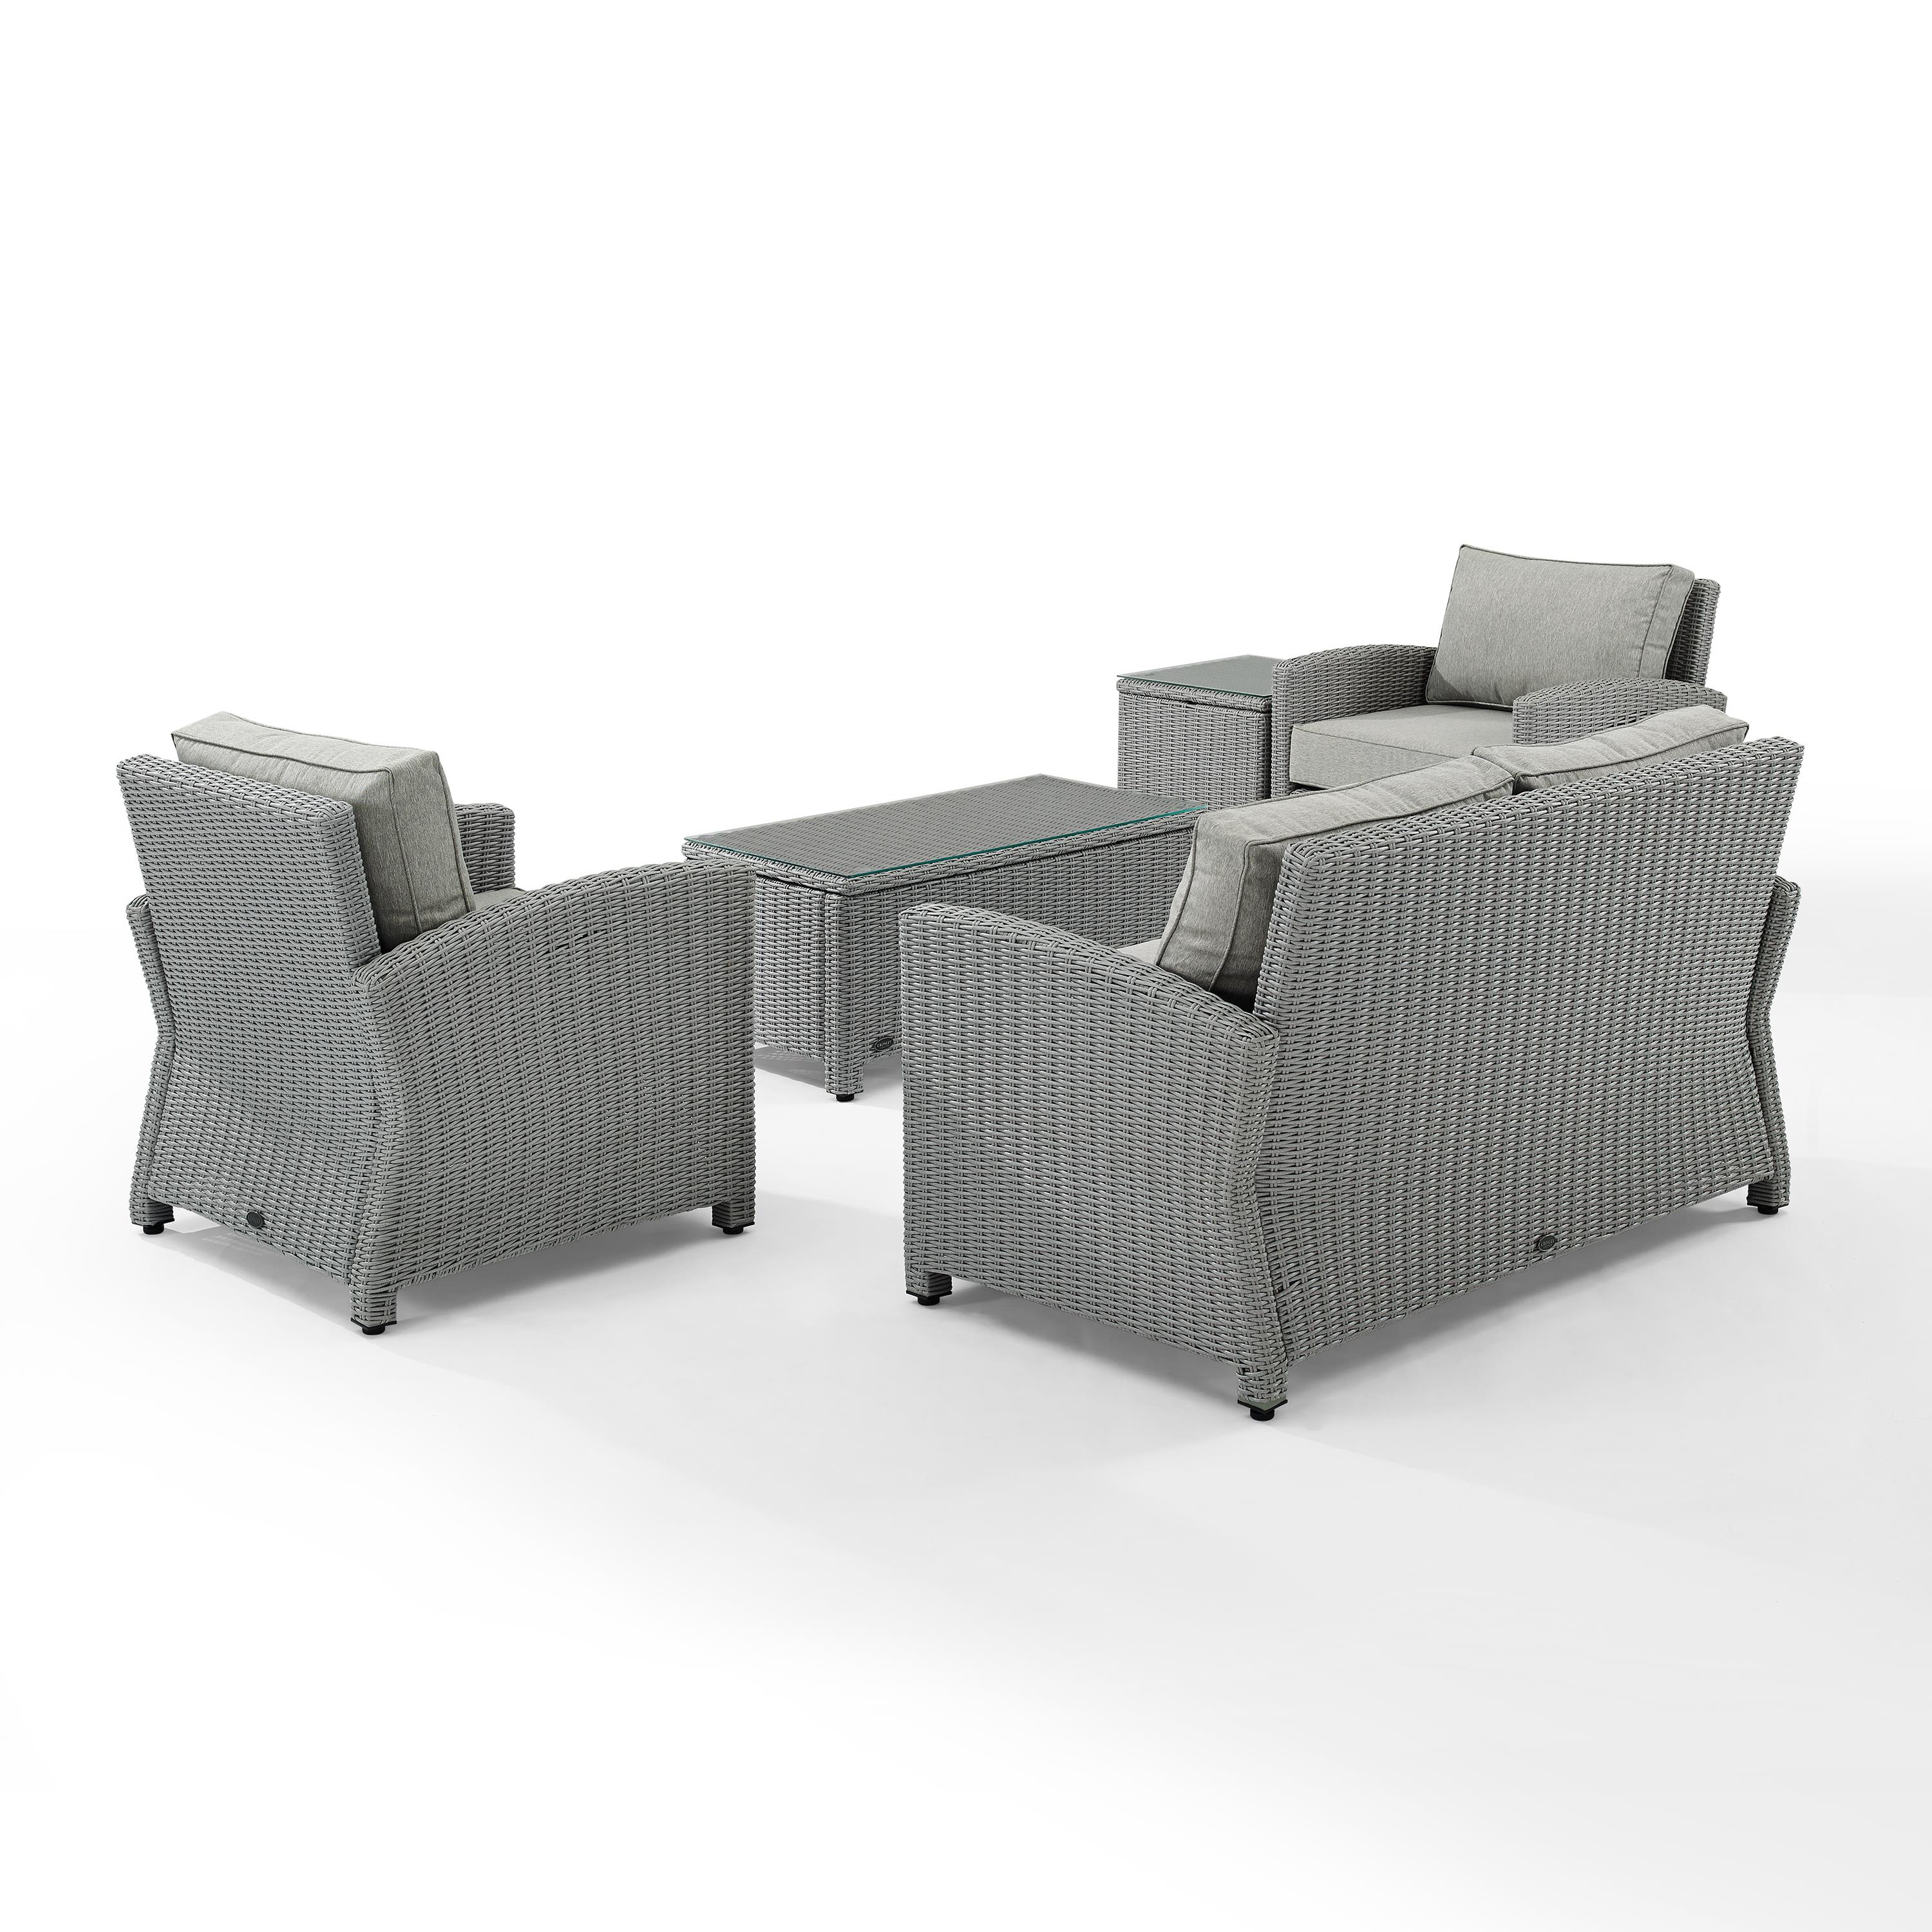 Crosley Bradenton 5 Piece Wicker Patio Sofa Set in Gray - image 3 of 7